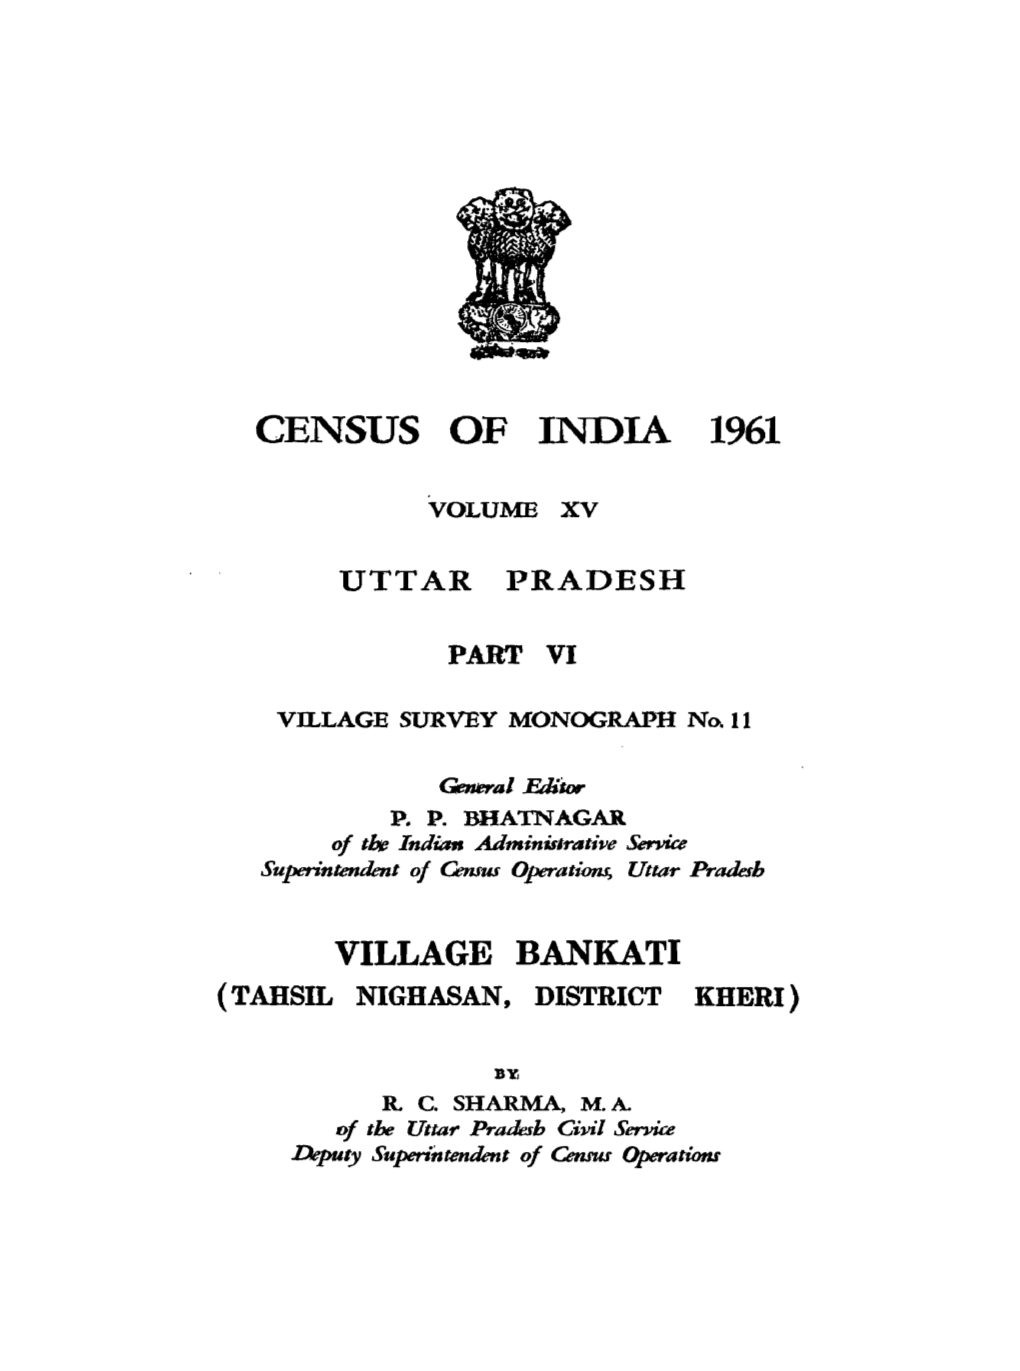 Village Survey Monograph No-11, Village Bankati, Part VI, Vol-XV